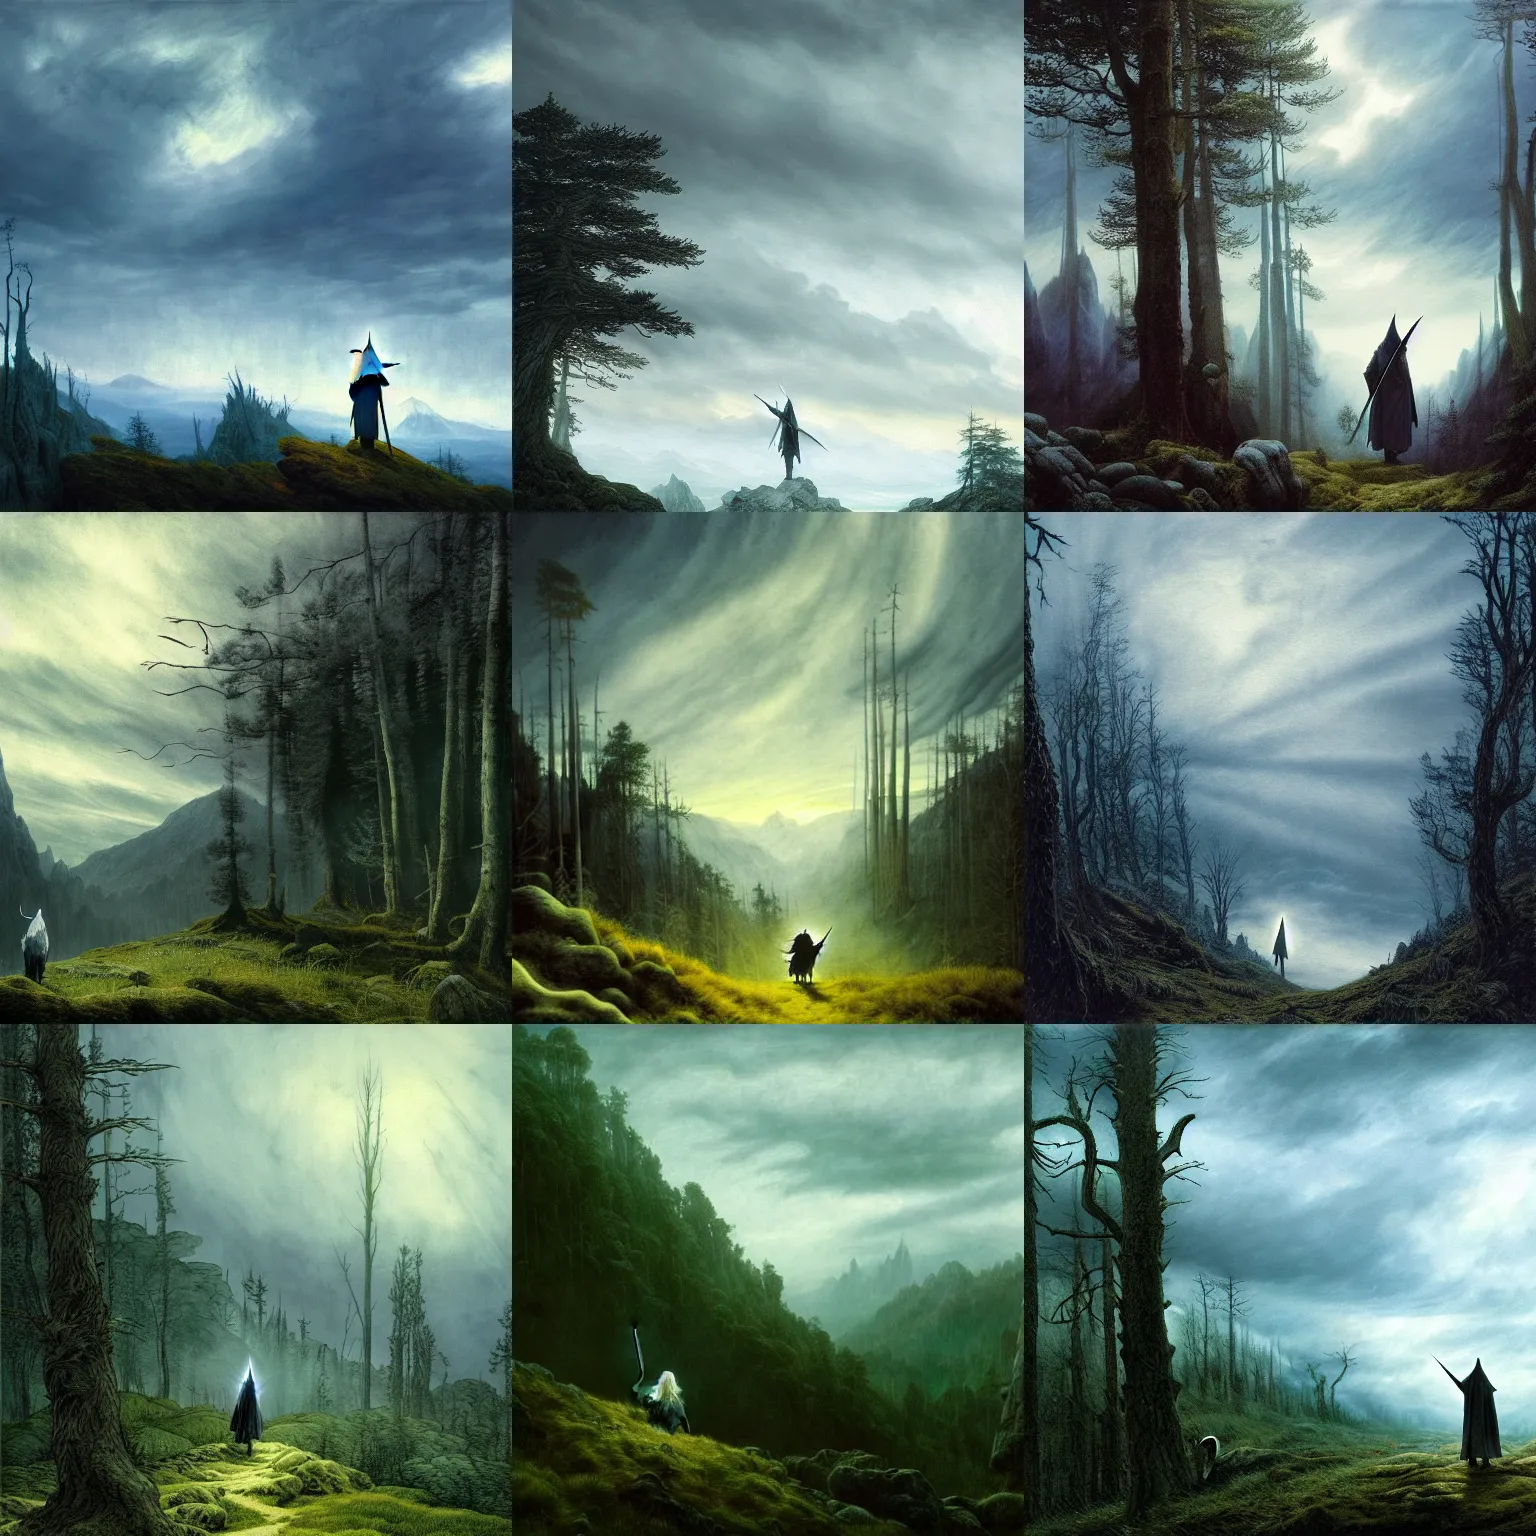 Prompt: Gandalf the Grey travelling in the forest, epic, epic sky, highly detailed, artstation, illustration, art by Caspar David Friedrich